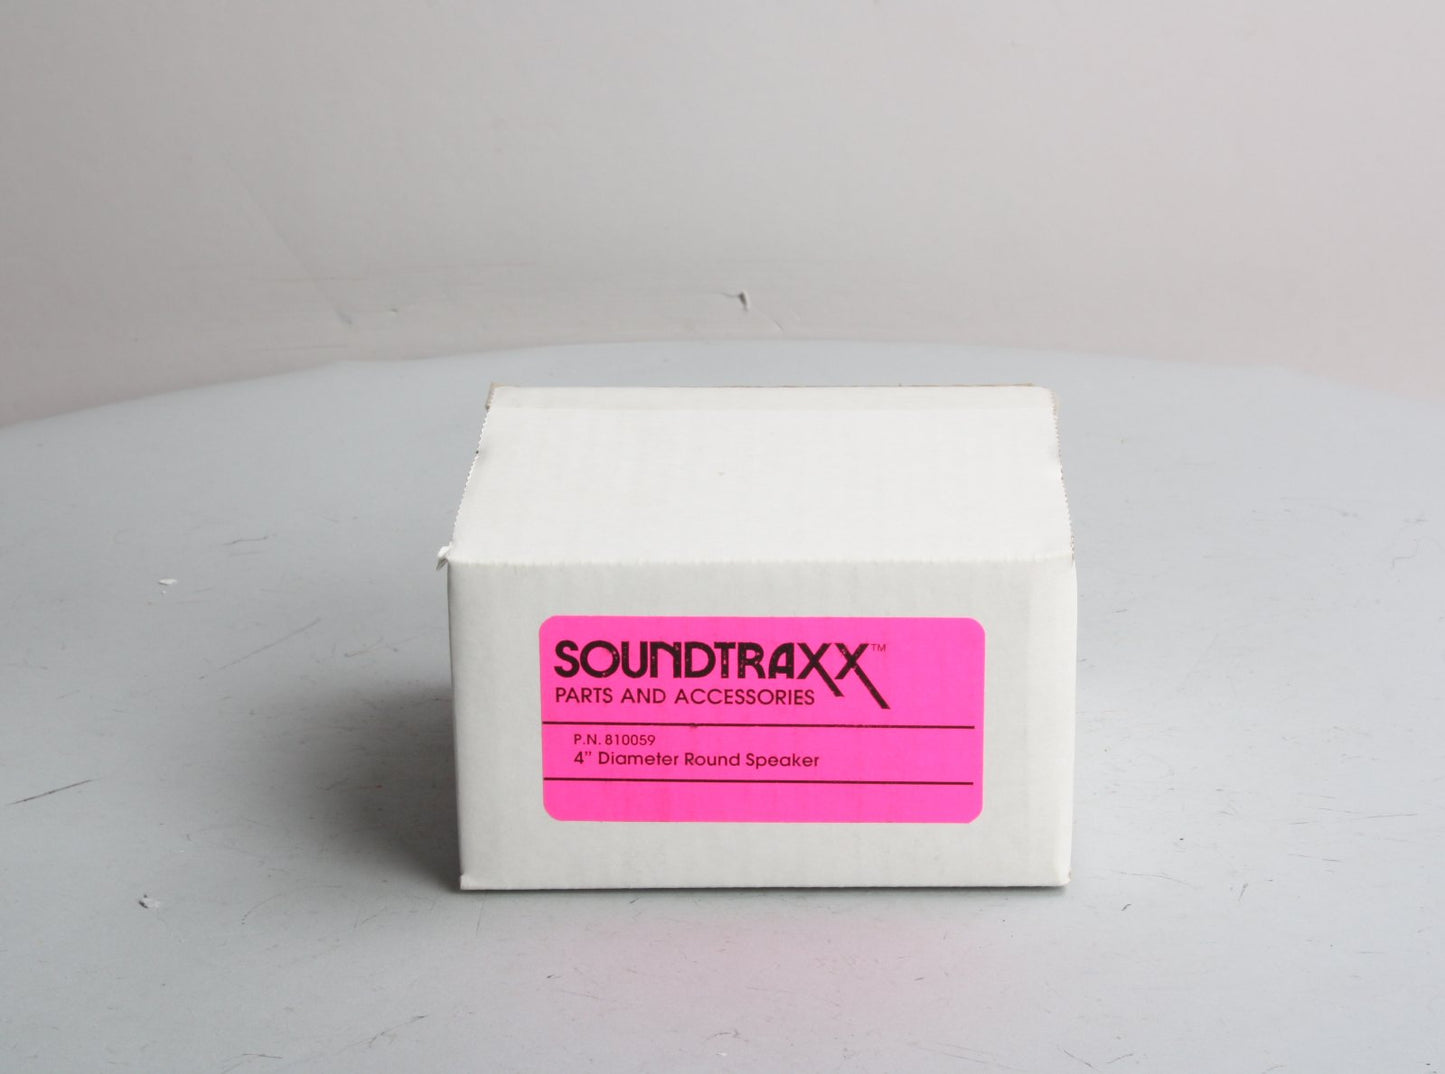 SoundTraxx 810059 4" Diameter Round Speaker